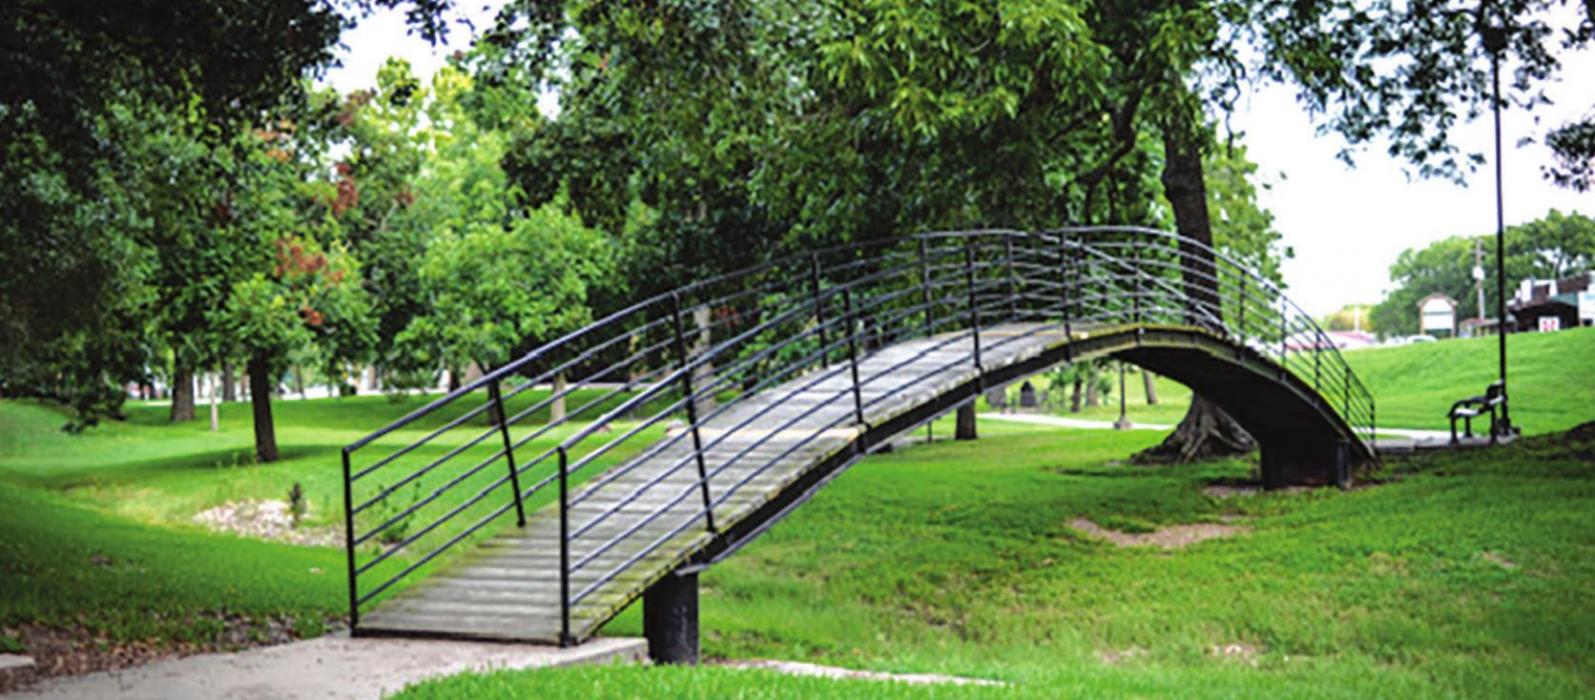 The beautiful bridge at Carmine’s Muehlbrad-Albers City Park.